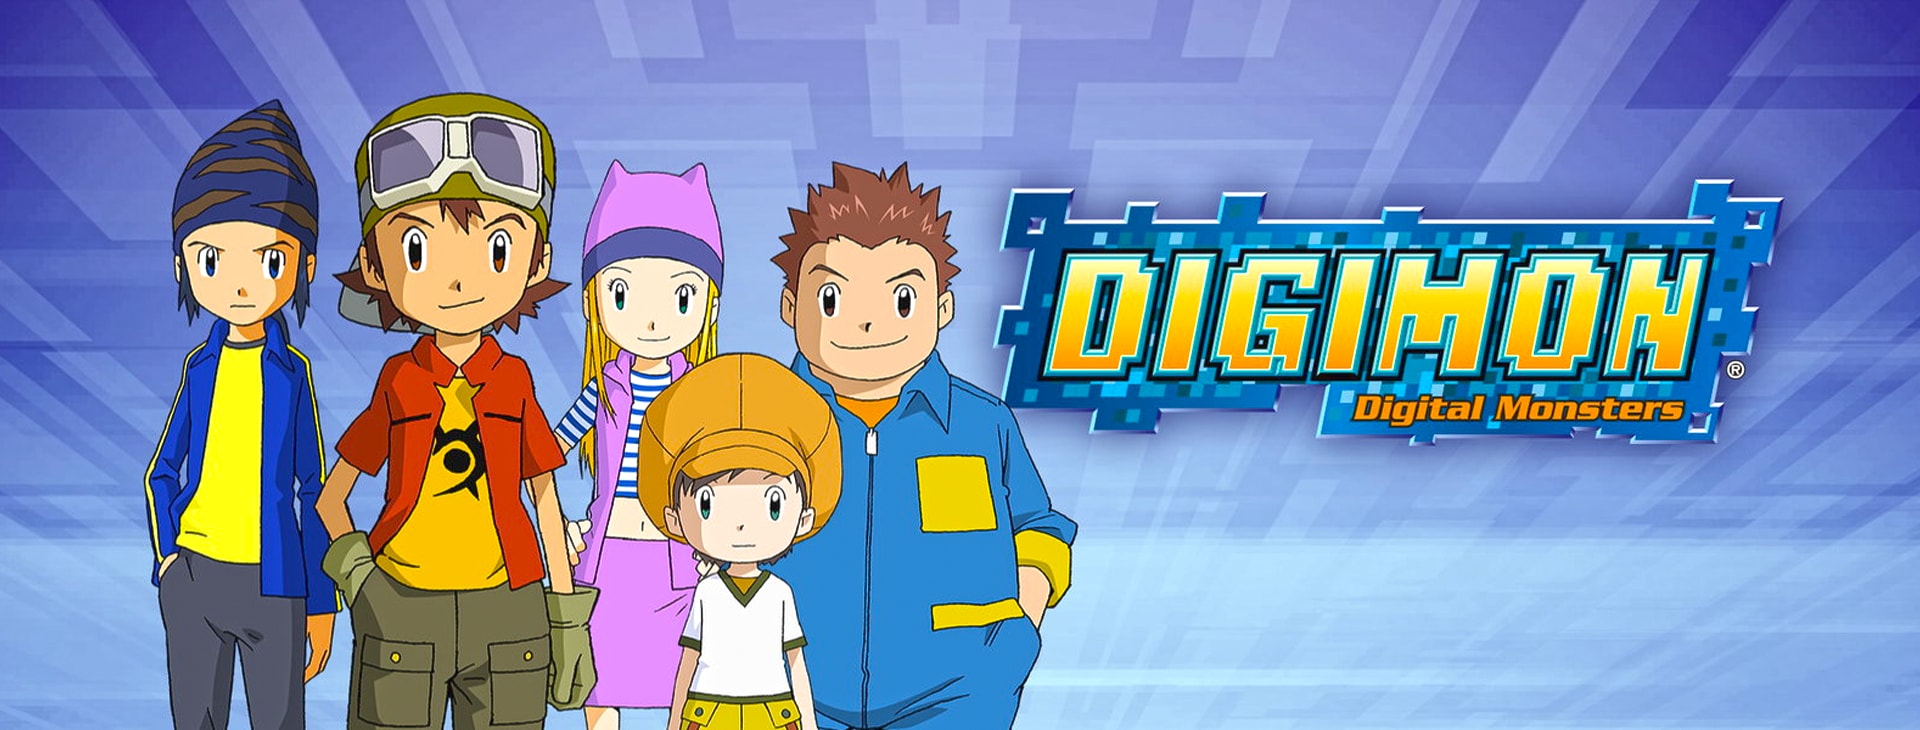 Assistir Digimon Frontier Dublado Episodio 1 Online